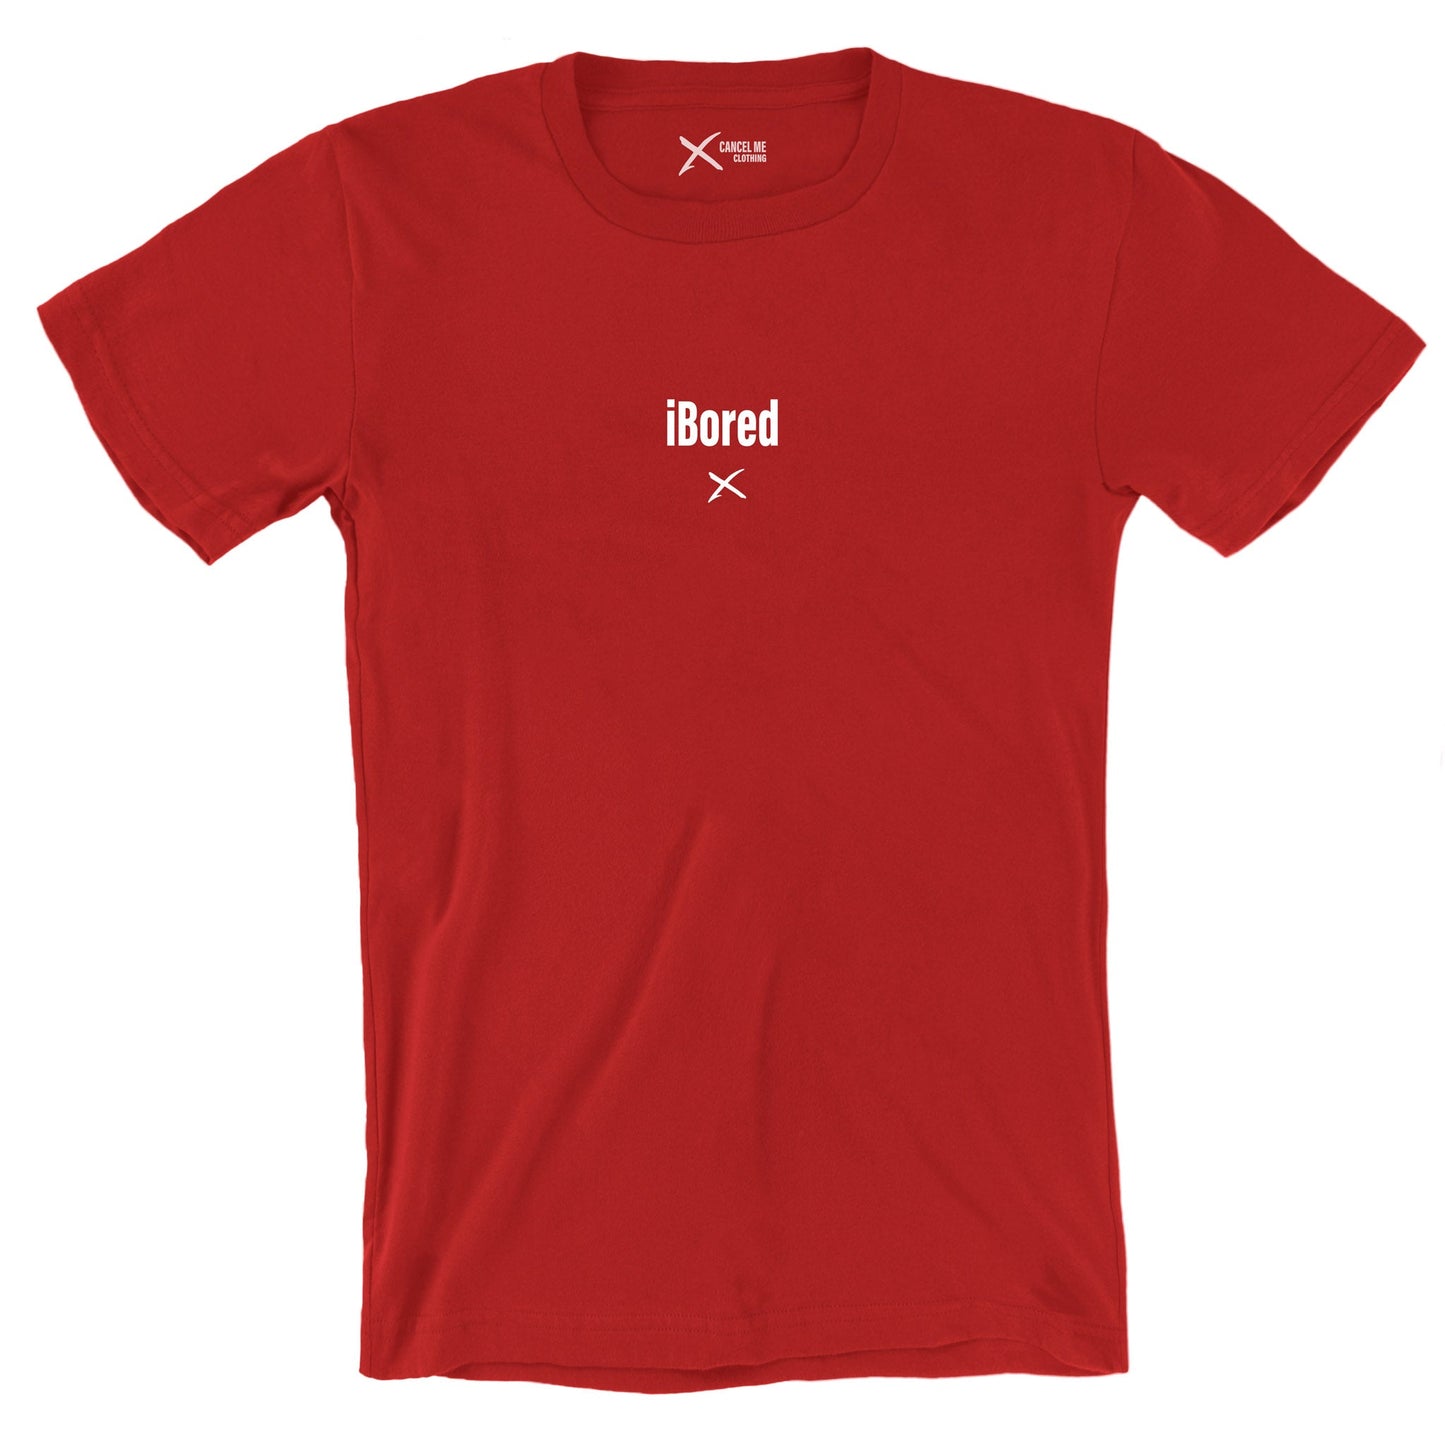 iBored - Shirt